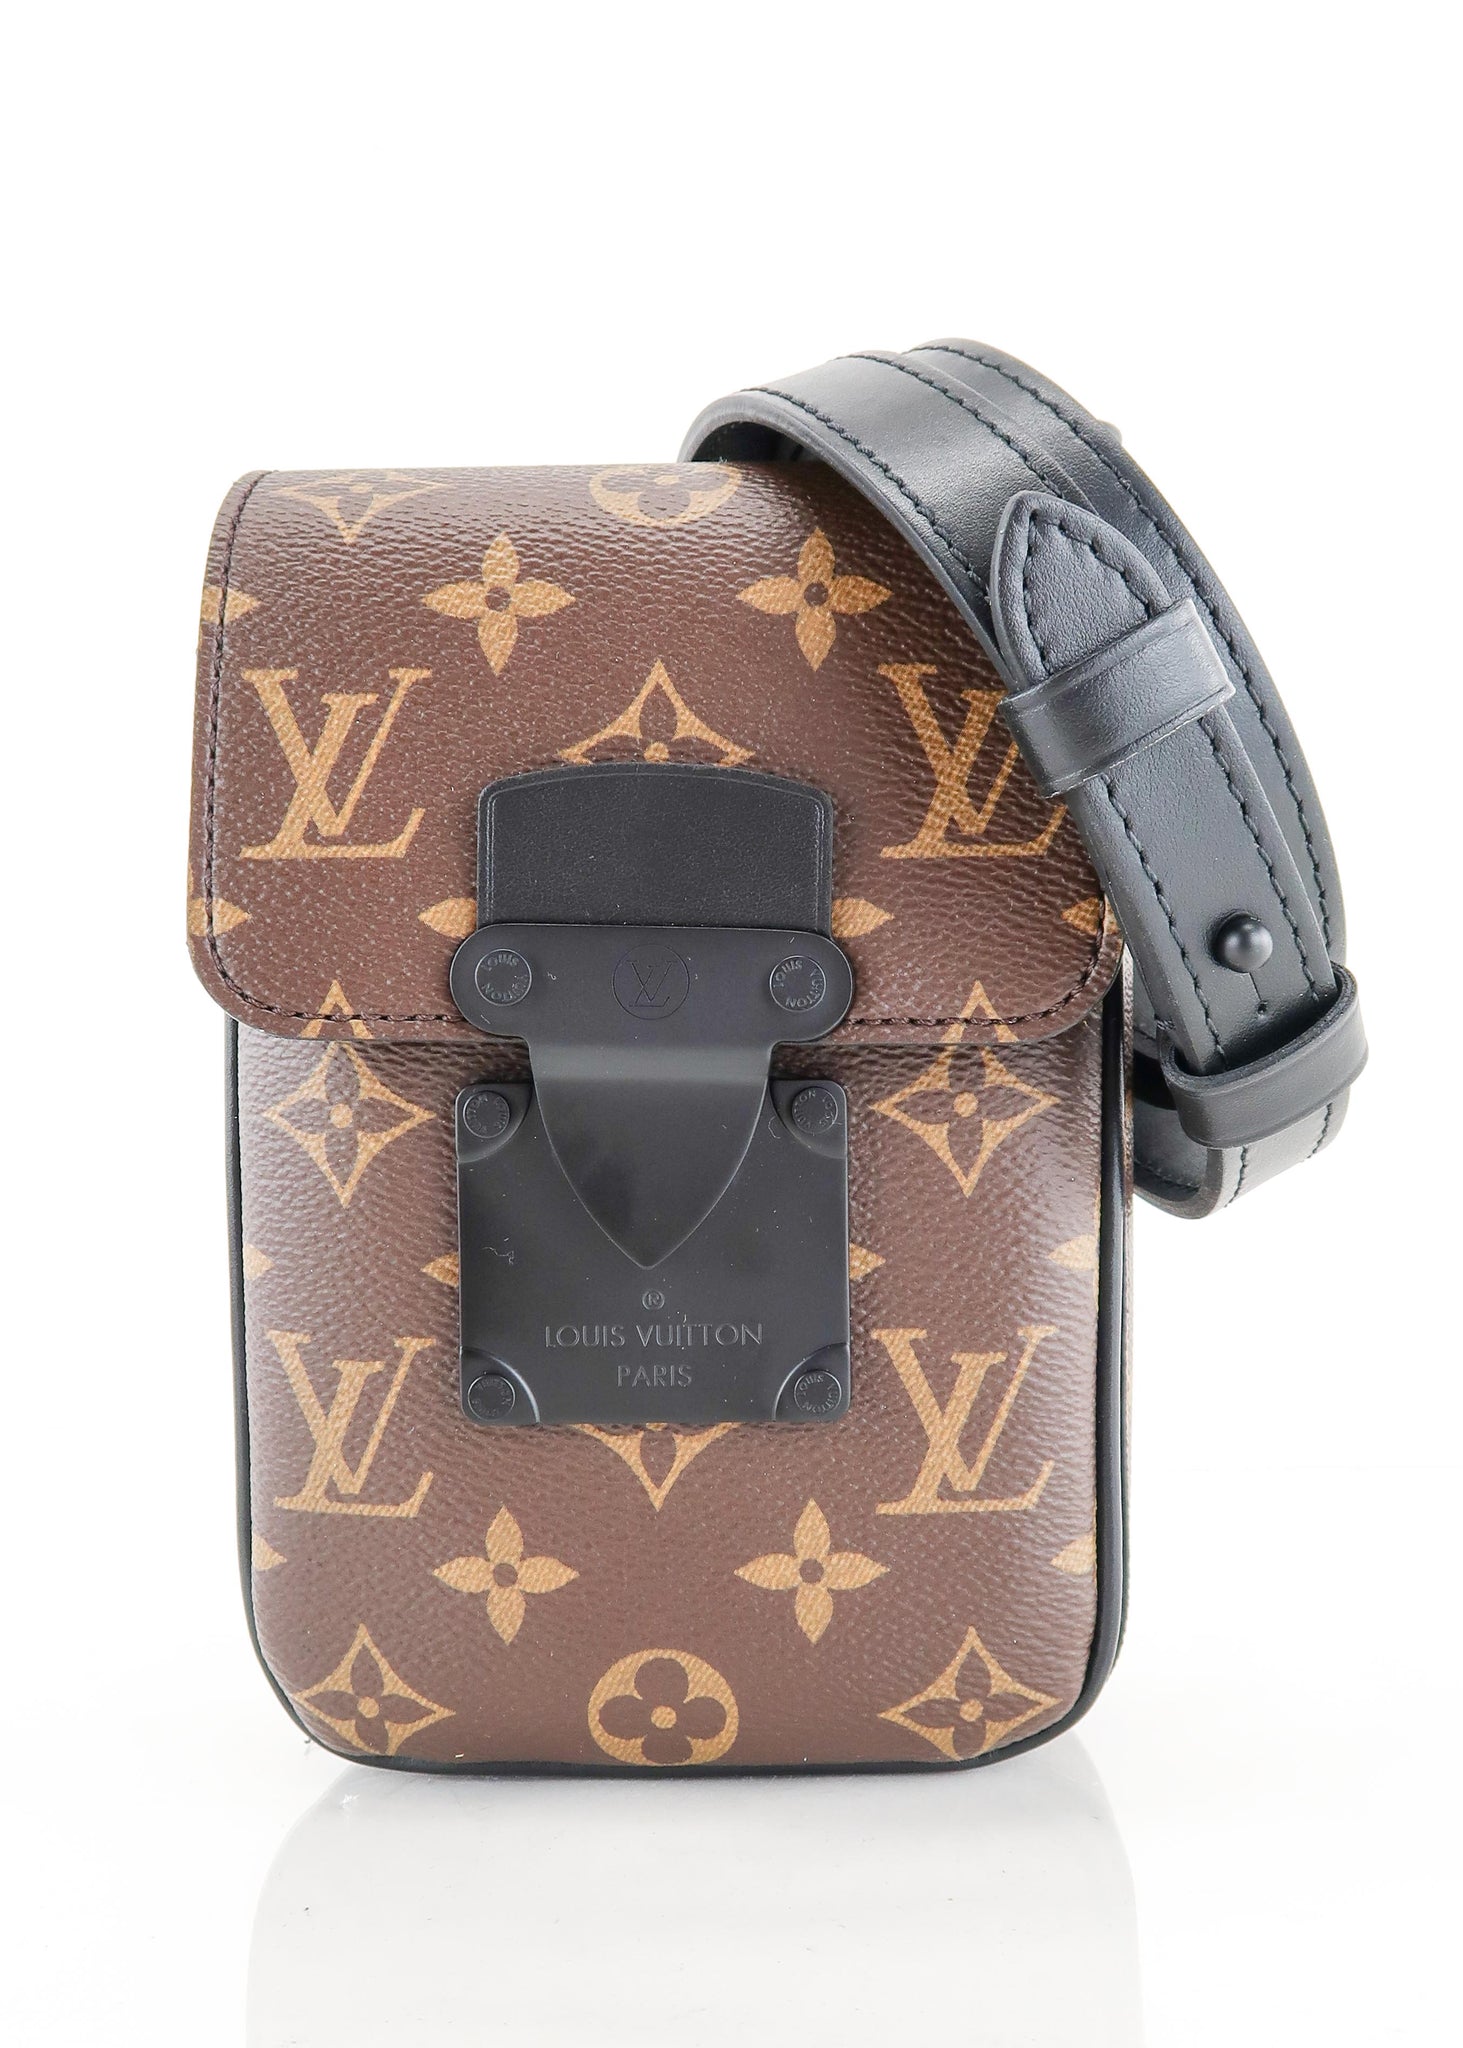 100% authenticity Guaranteed - Louis Vuitton: 1 Lock 1 Key Set